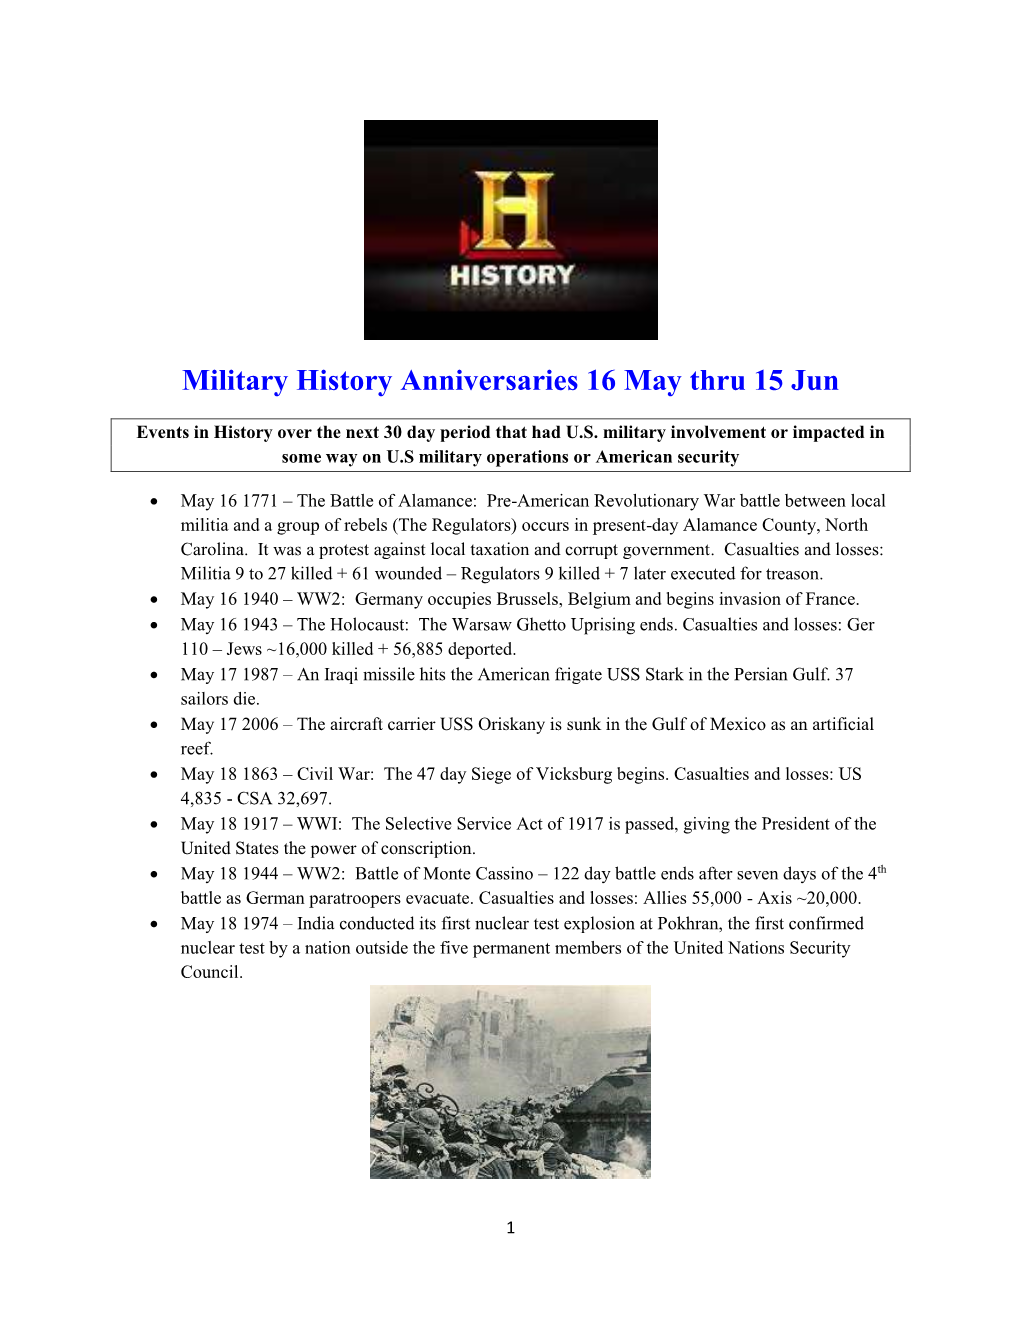 Military History Anniversaries 16 May Thru 15 Jun